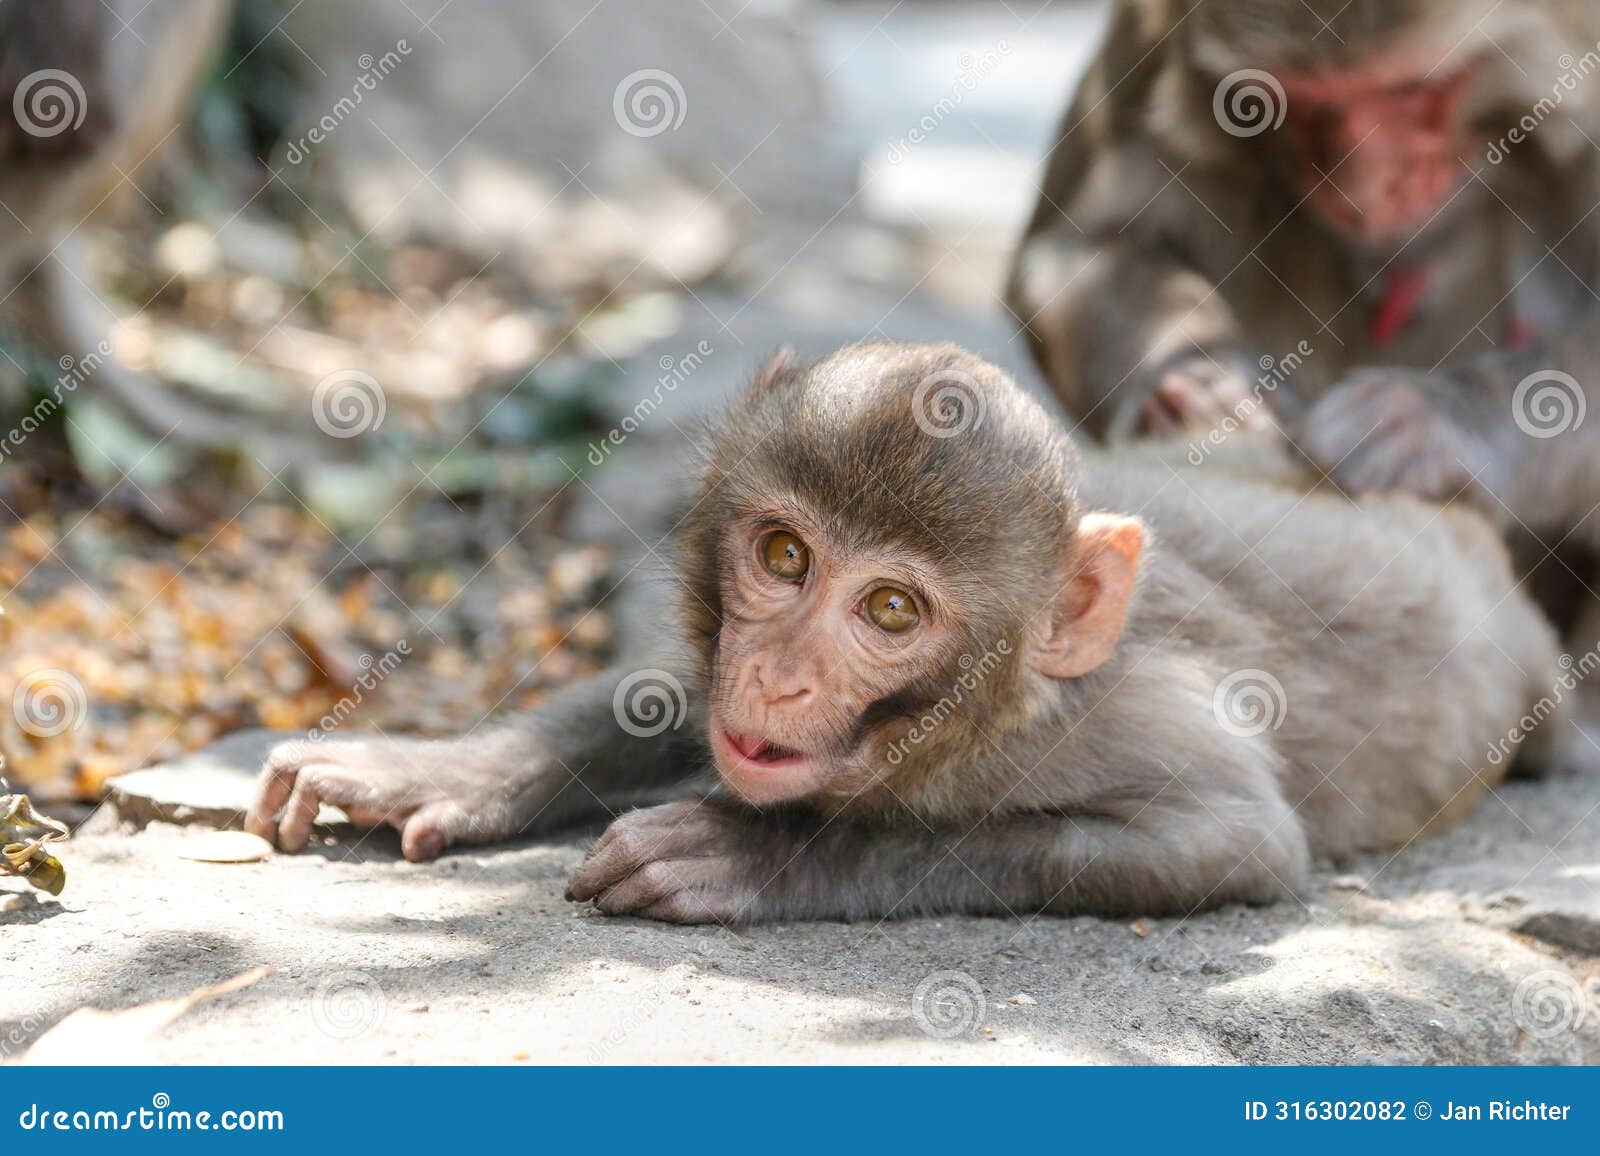 mother ape picking fleas off baby ape